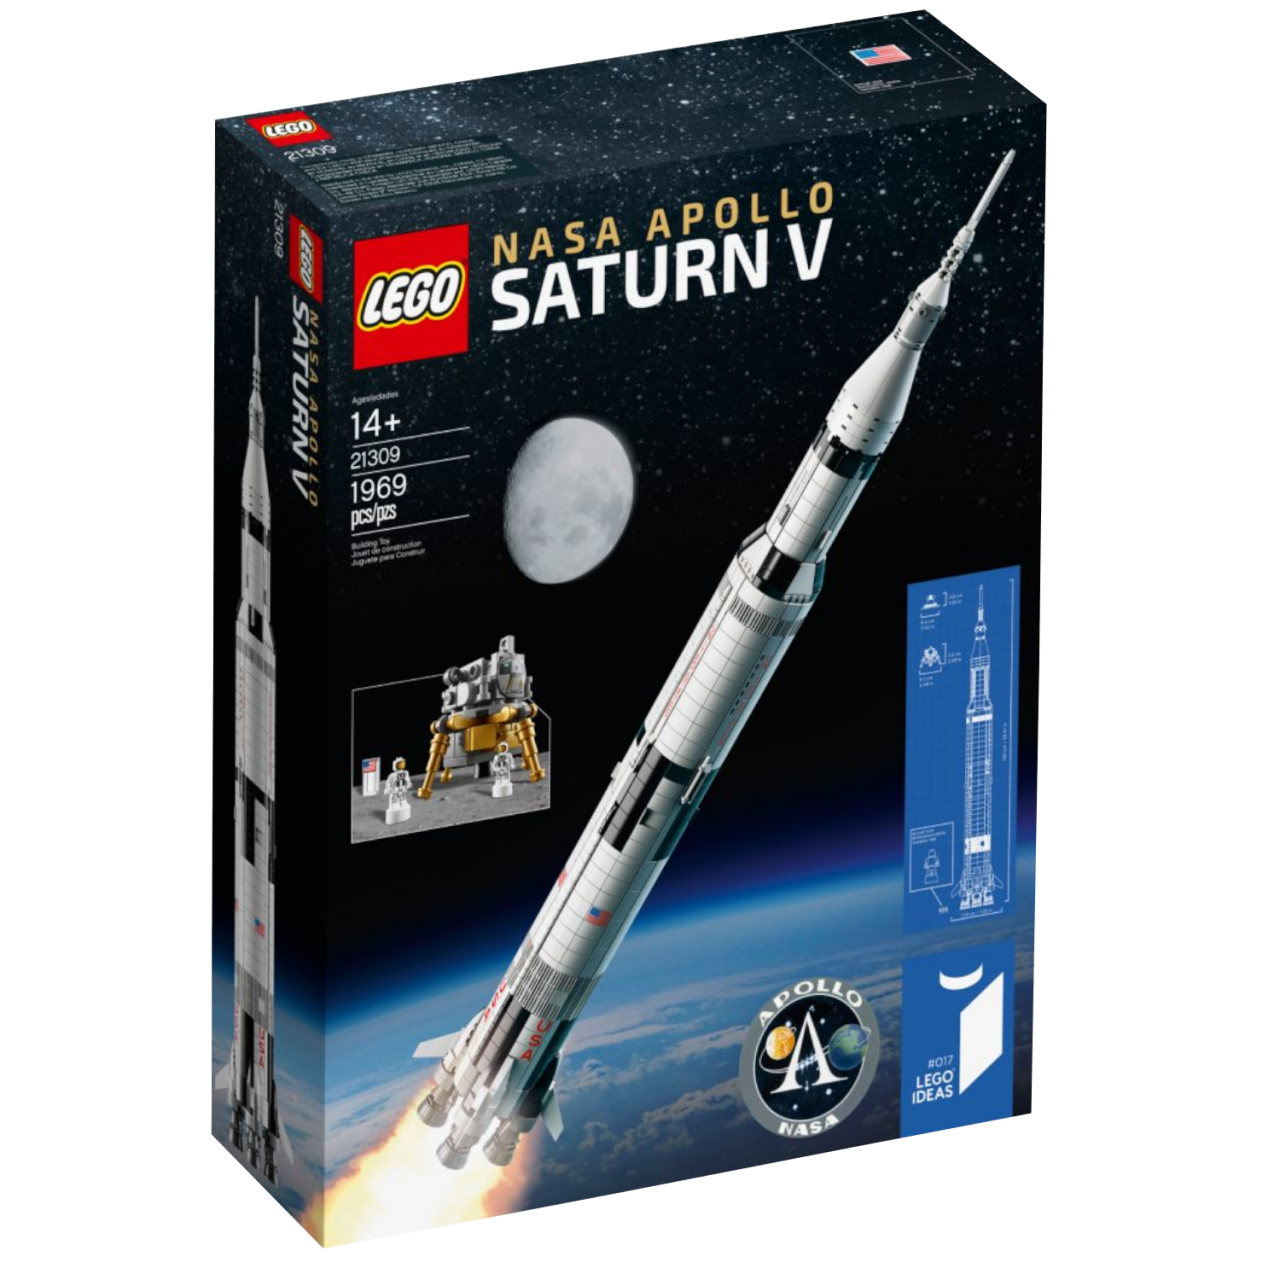 LEGO IDEAS 21309 NASA Apollo Saturn V